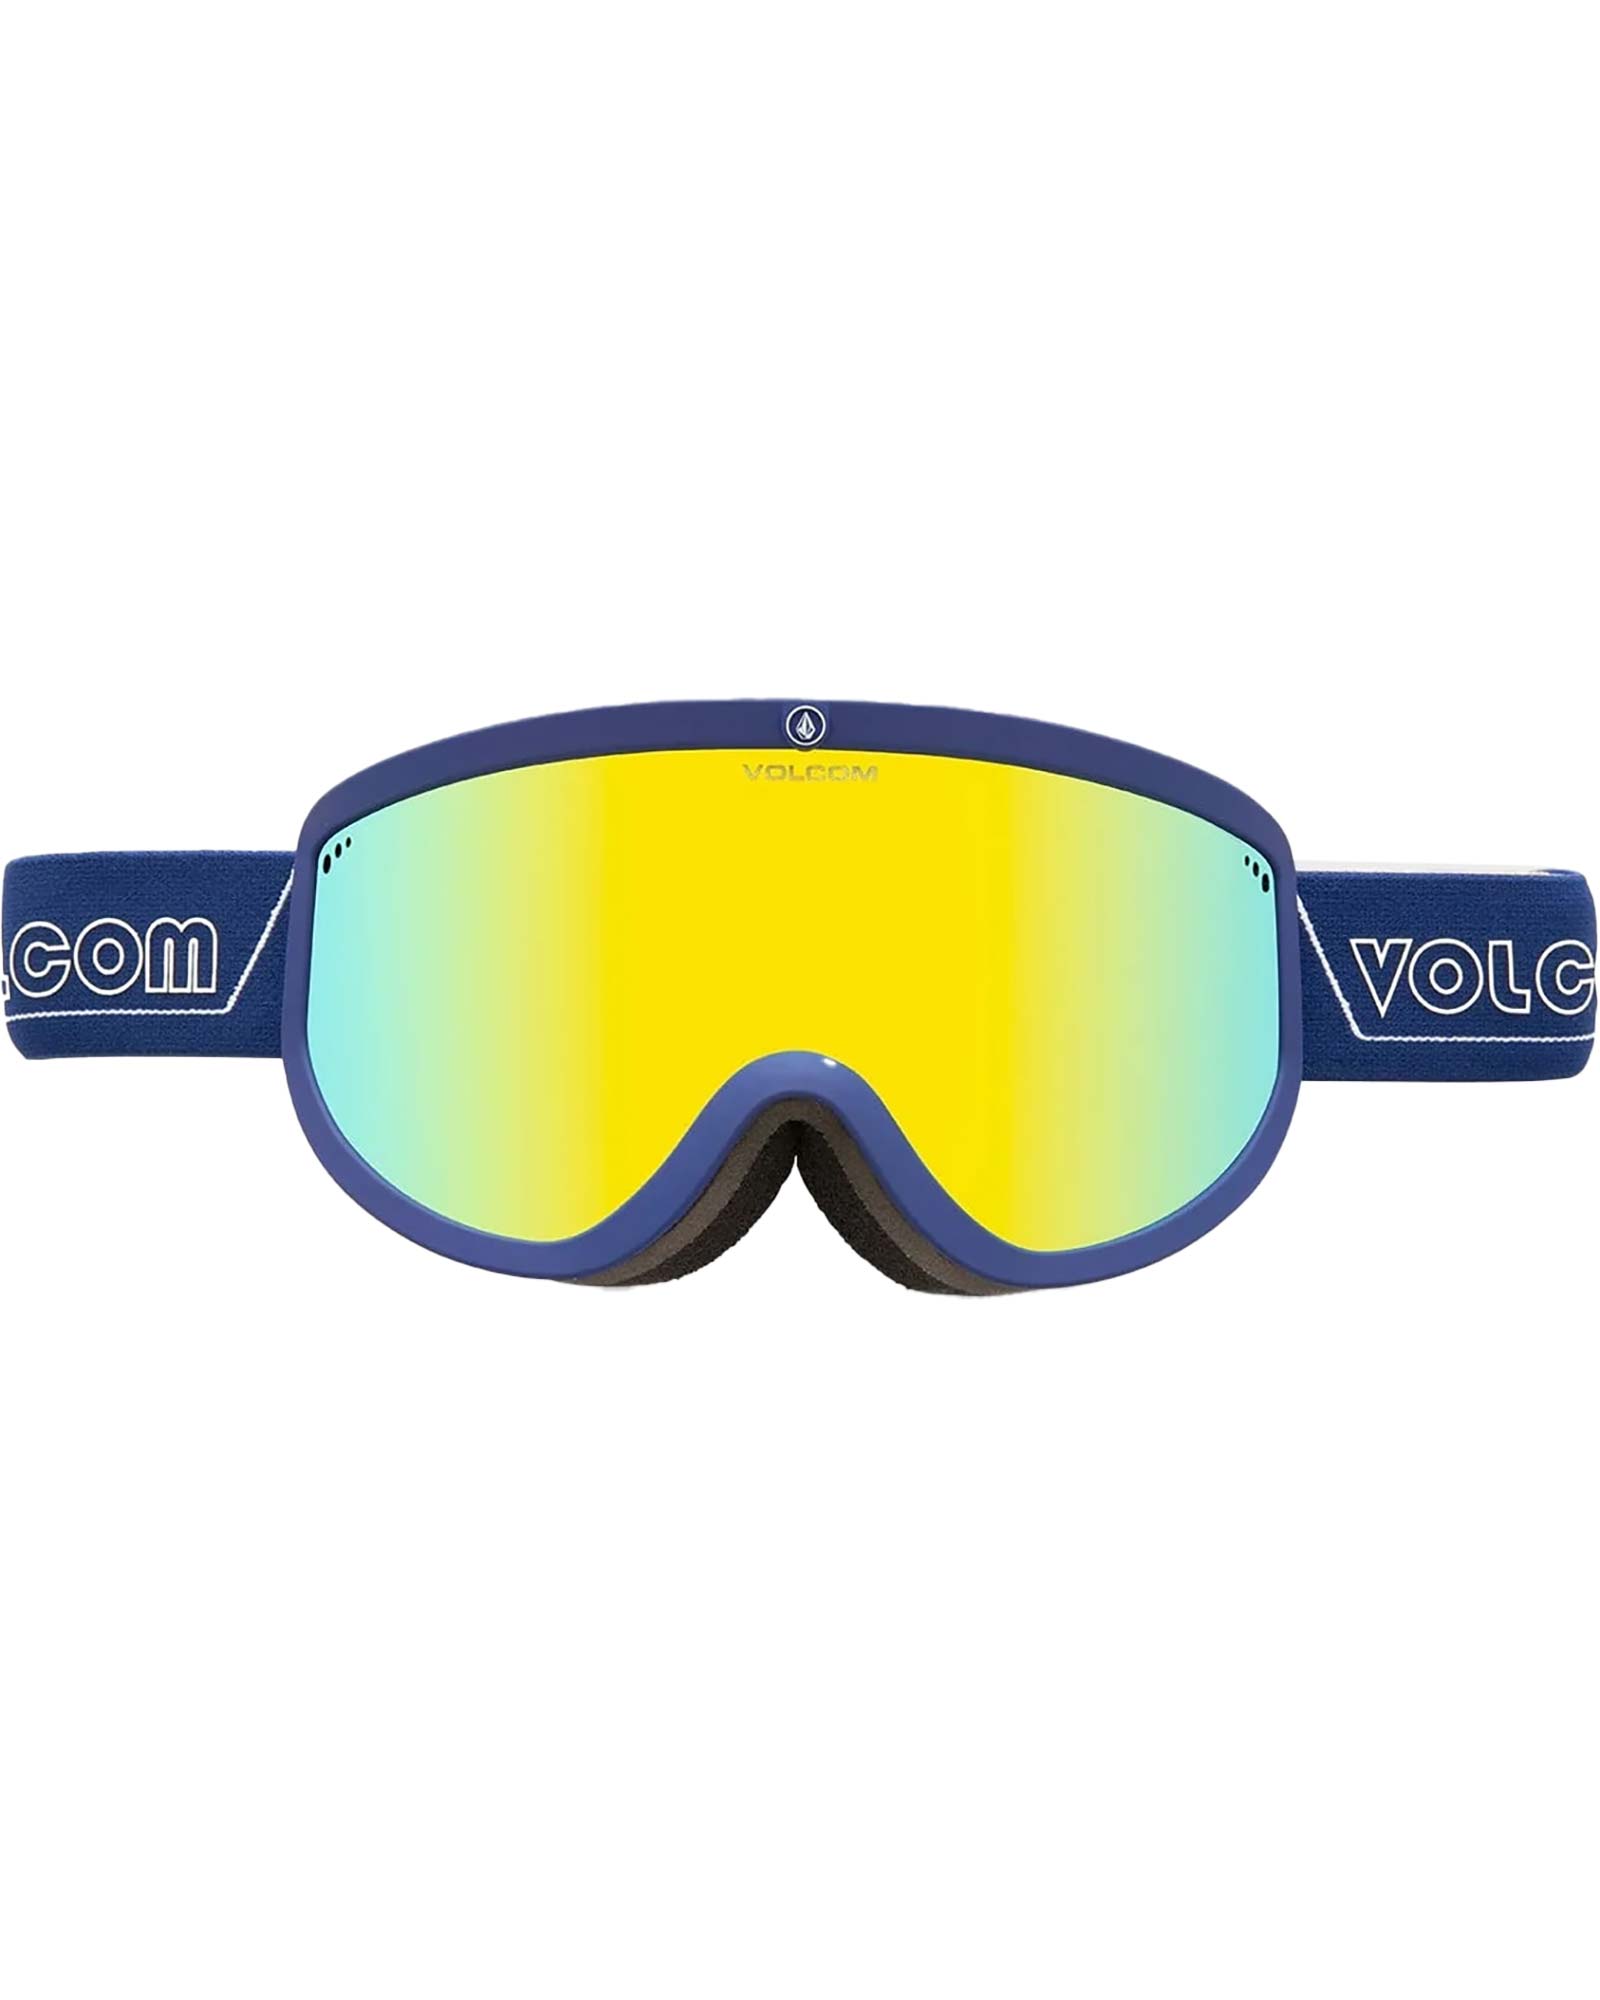 Volcom Footprints Dark Blue/White / Gold Chrome Goggles 0